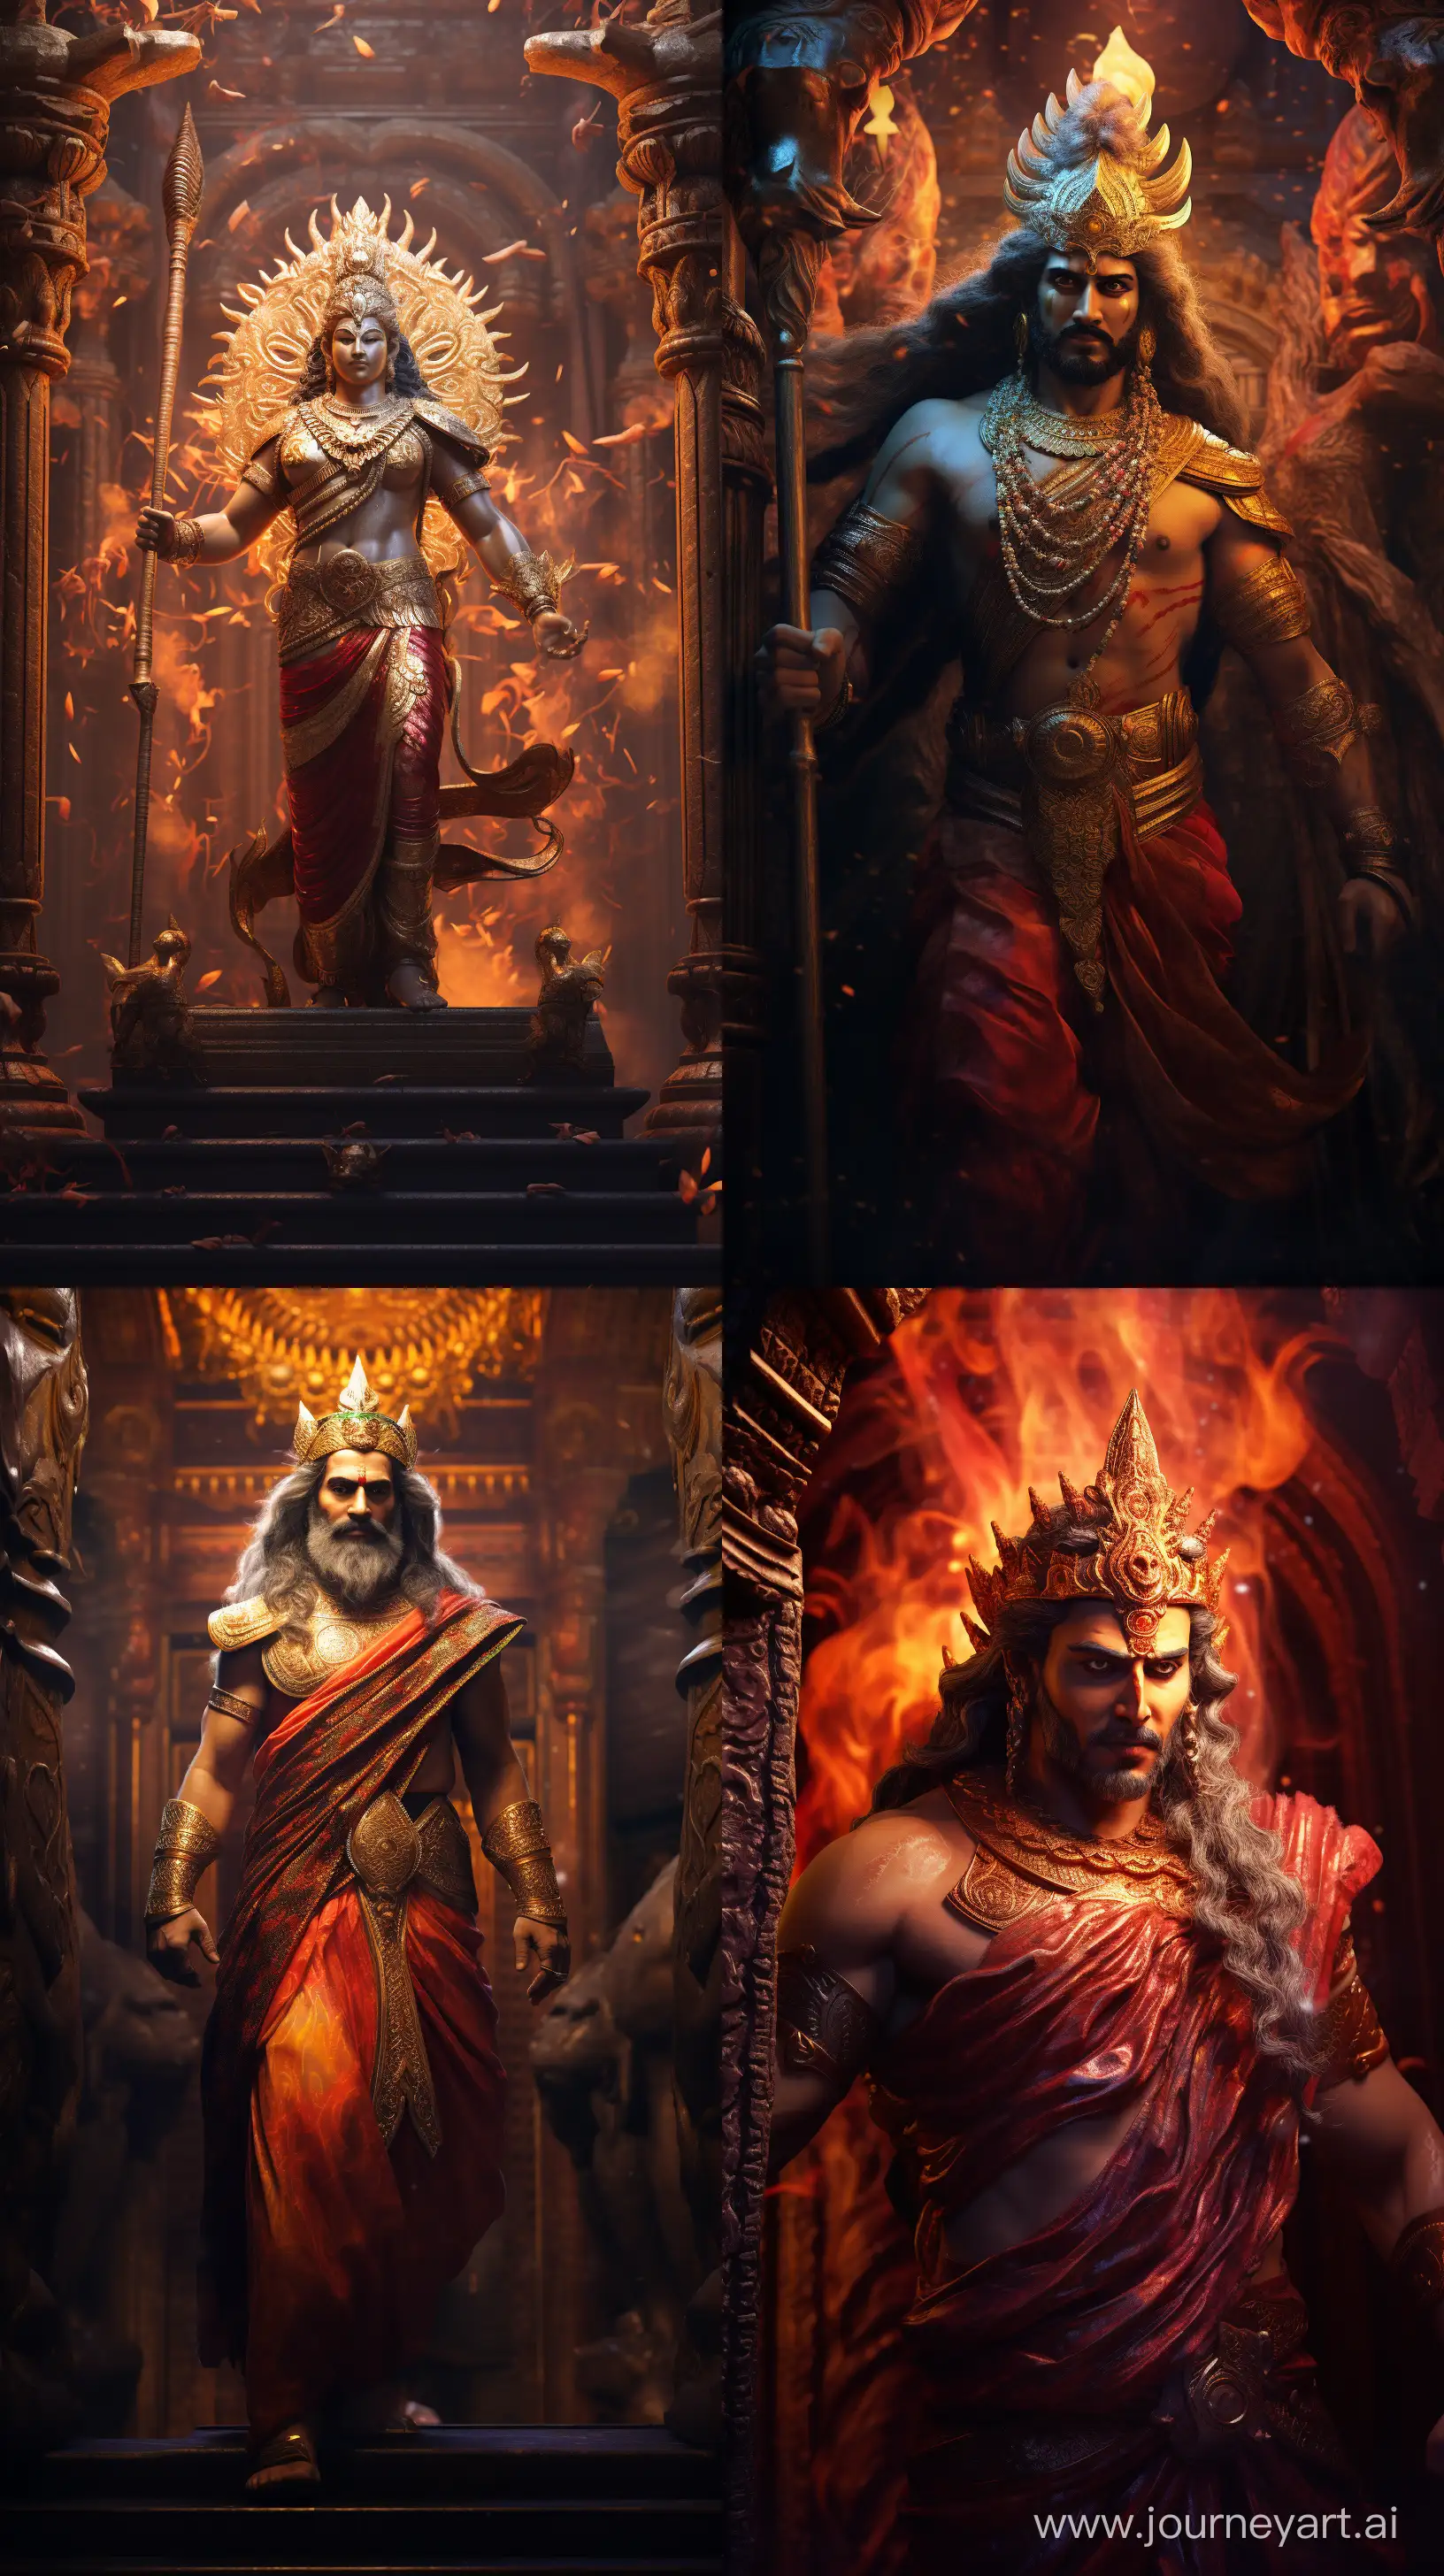 Realistic-Lord-Hanuman-Entering-Entrance-CloseUp-Image